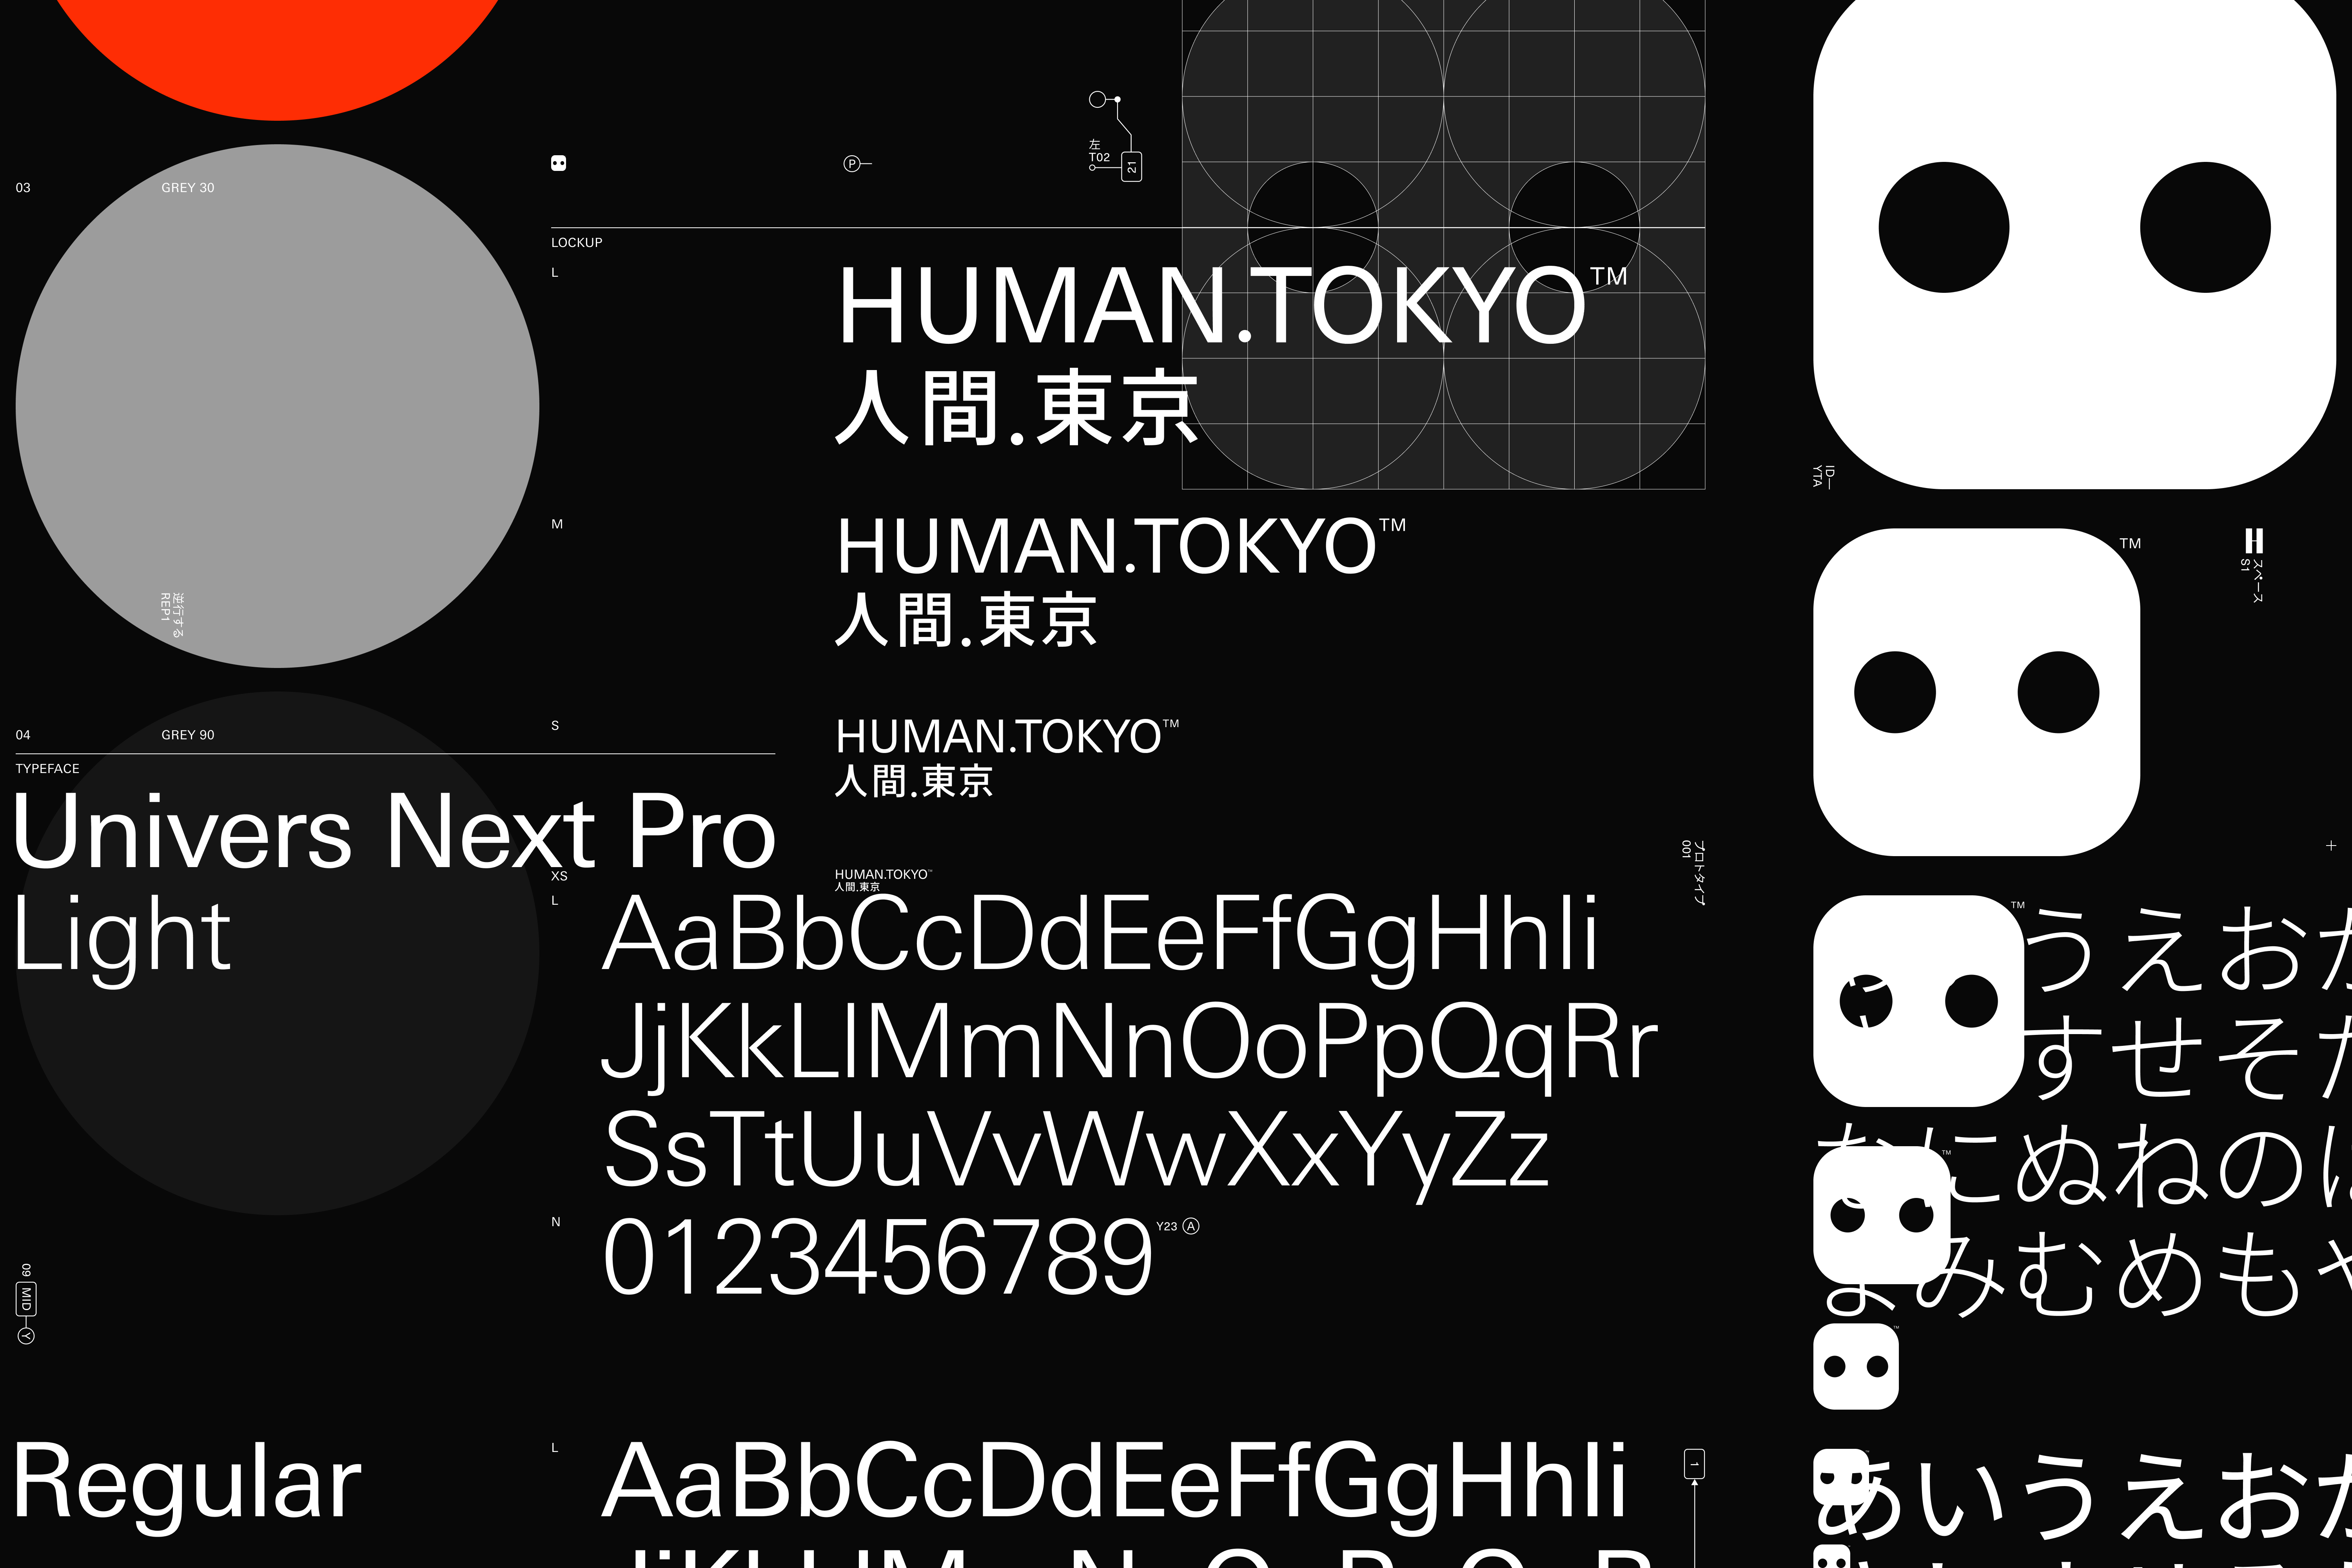 Human Tokyo 5